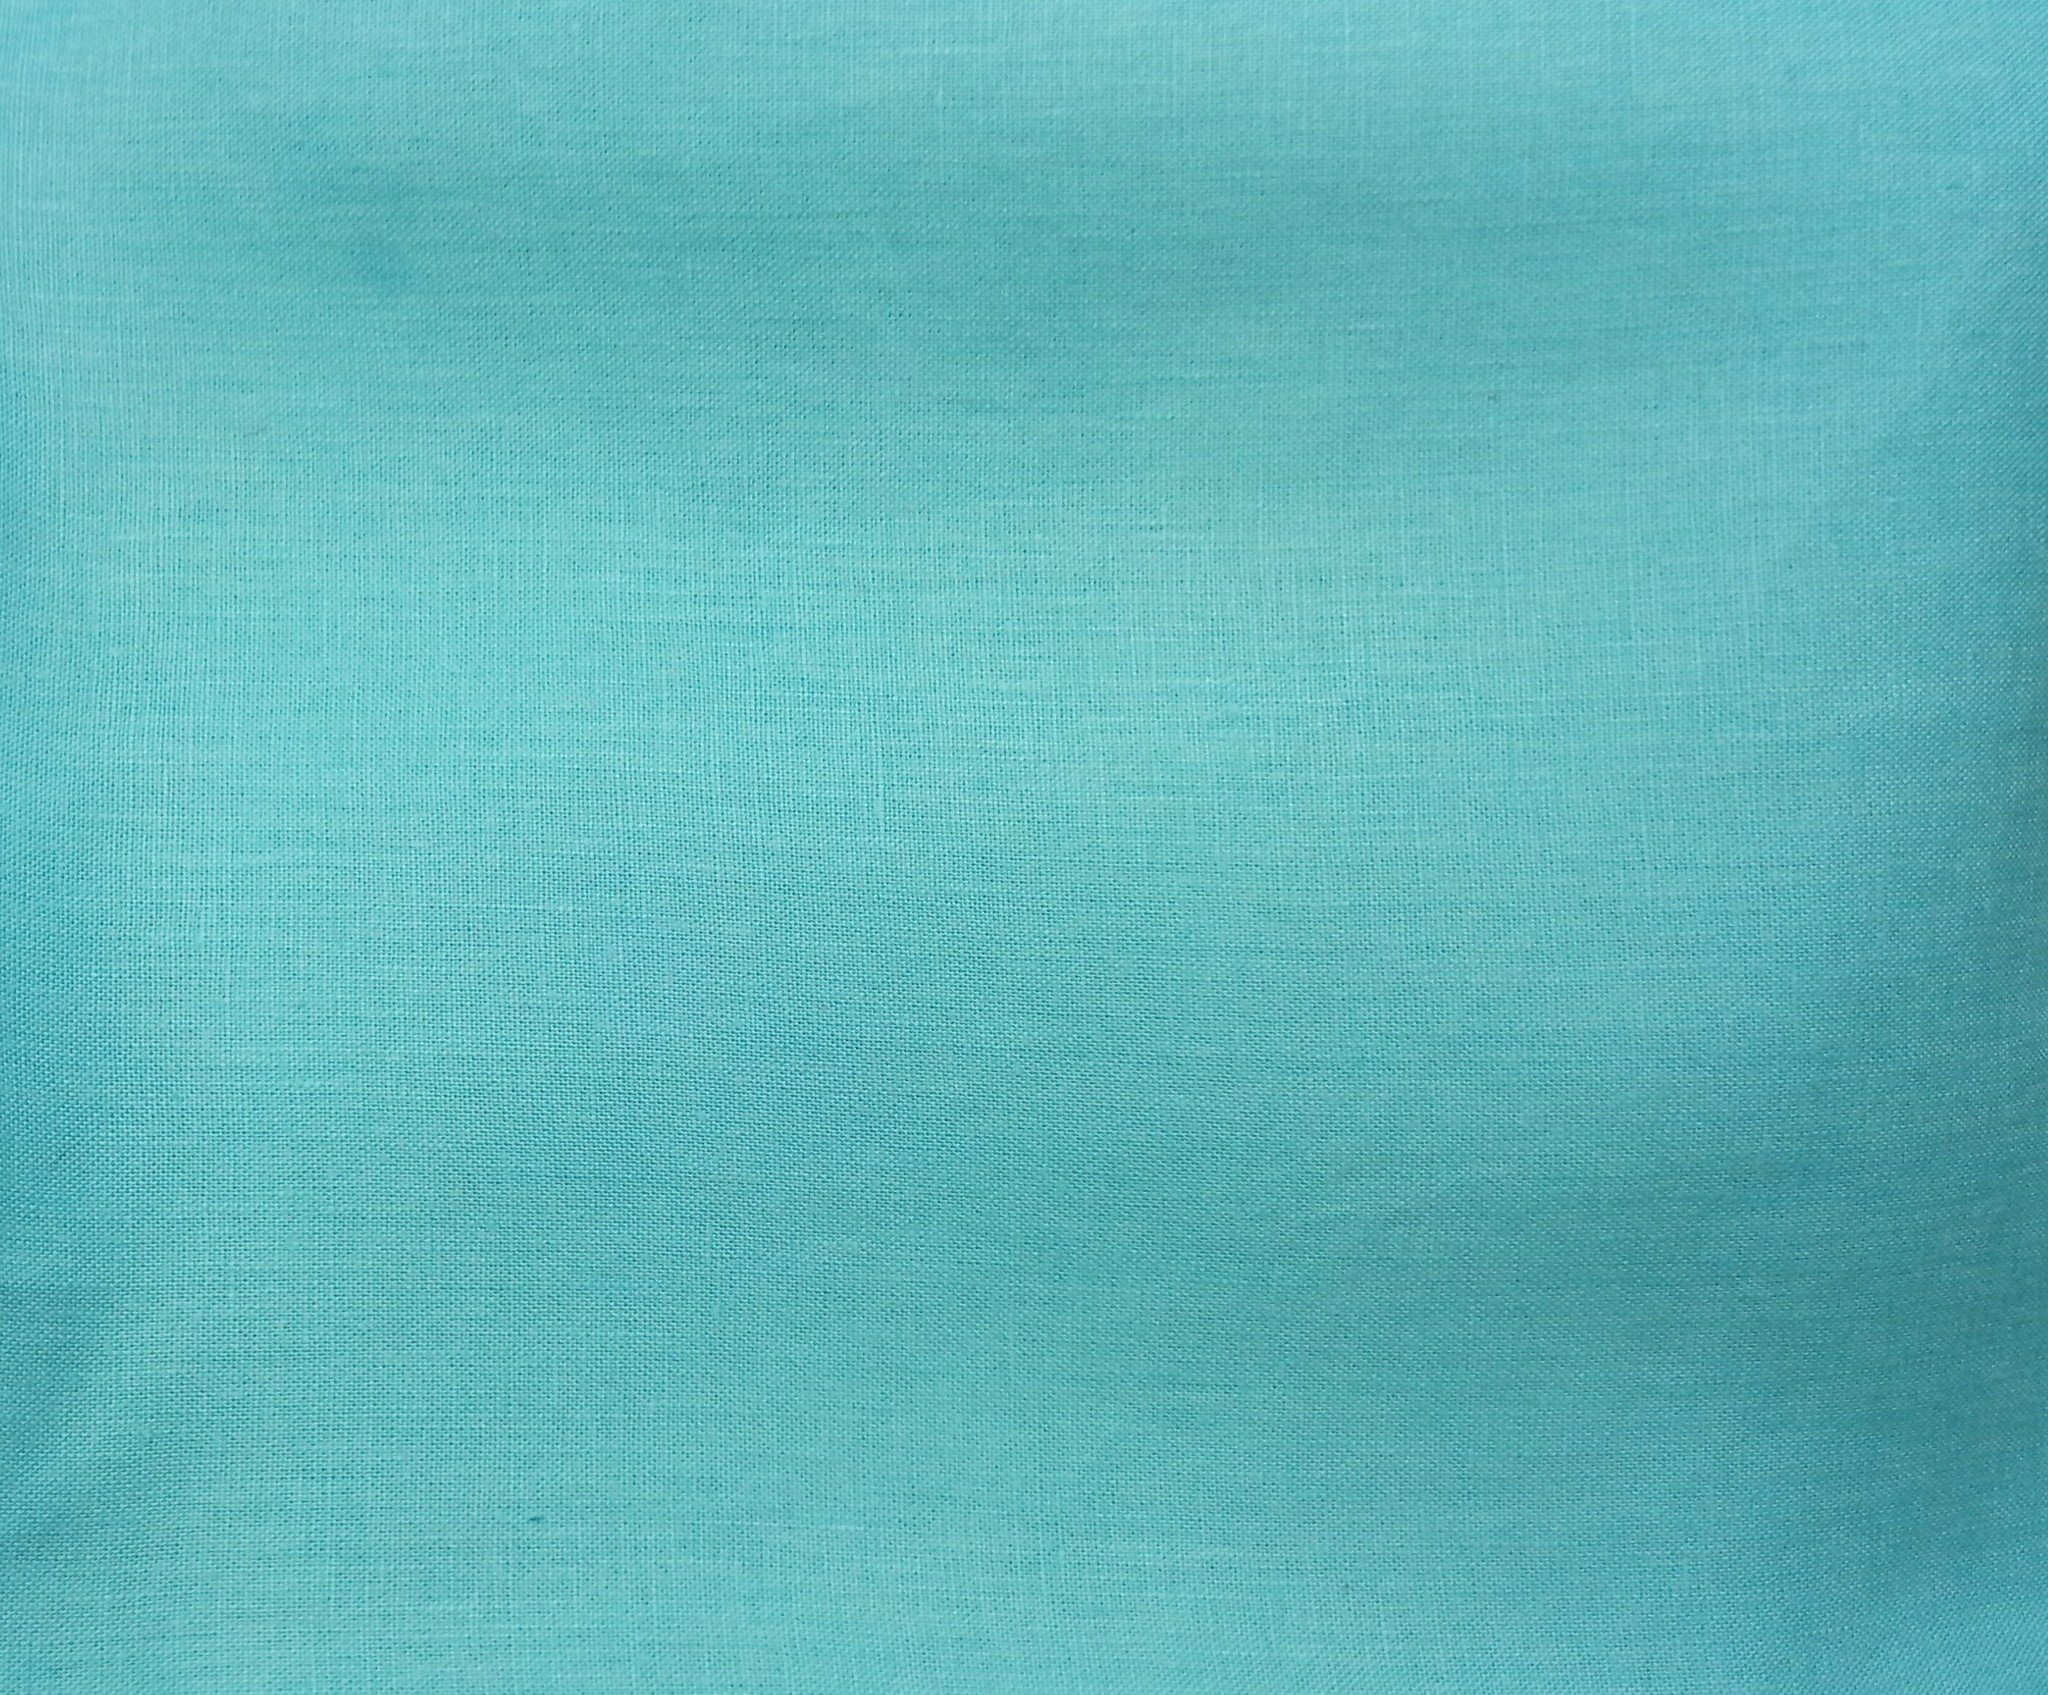 Turquoise" fabric